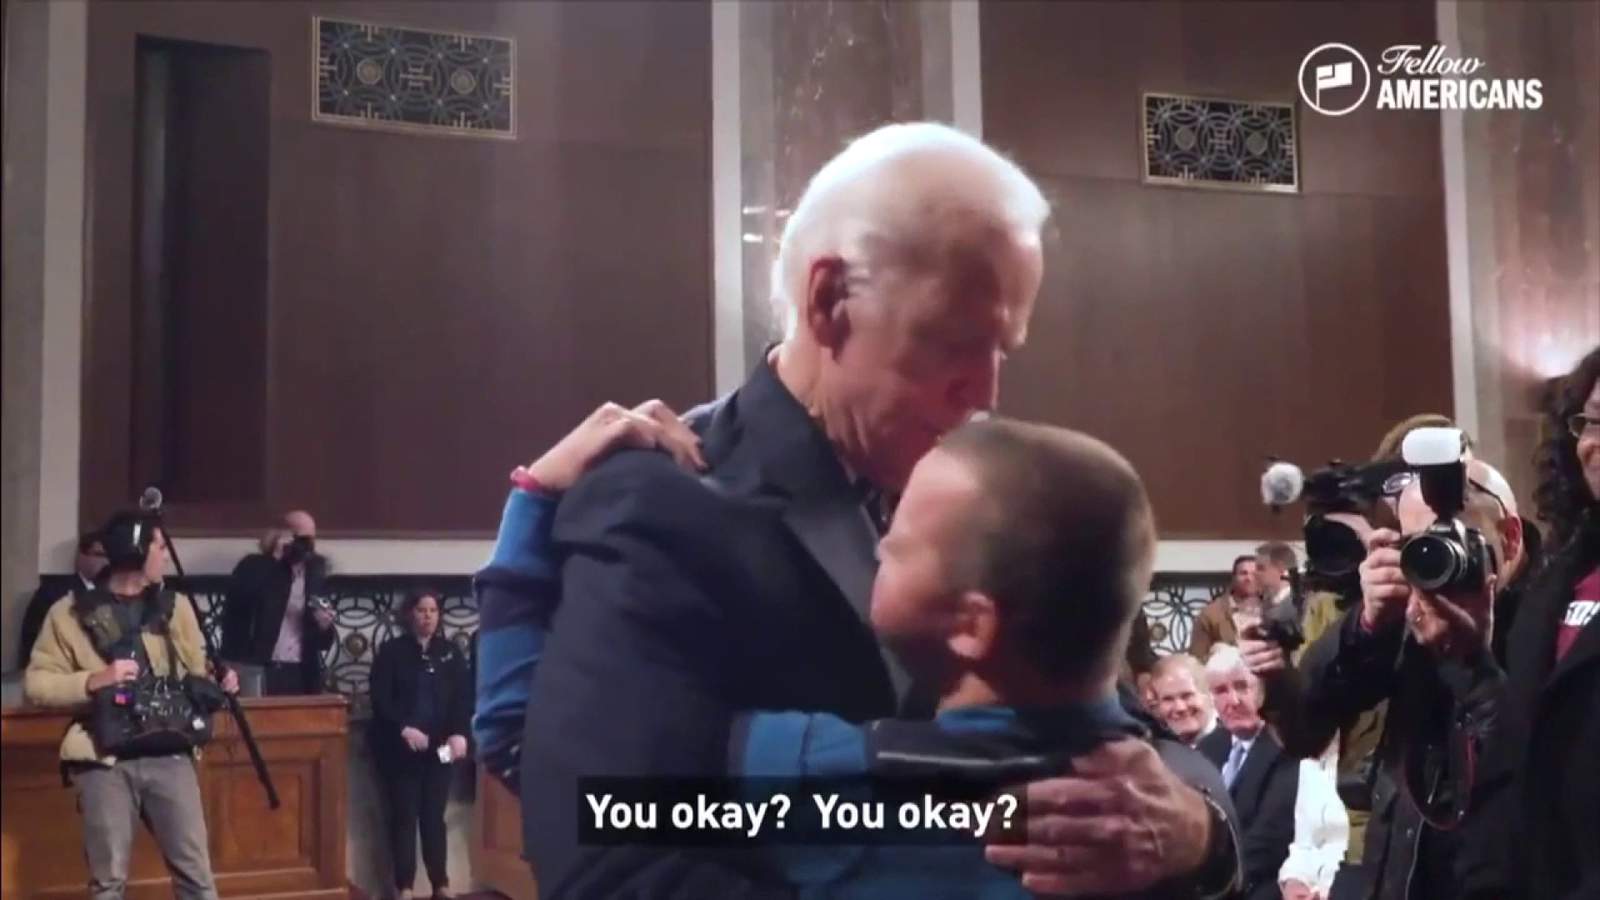 Campaign video of Joe Biden comforting Parkland shooting victim’s son goes viral